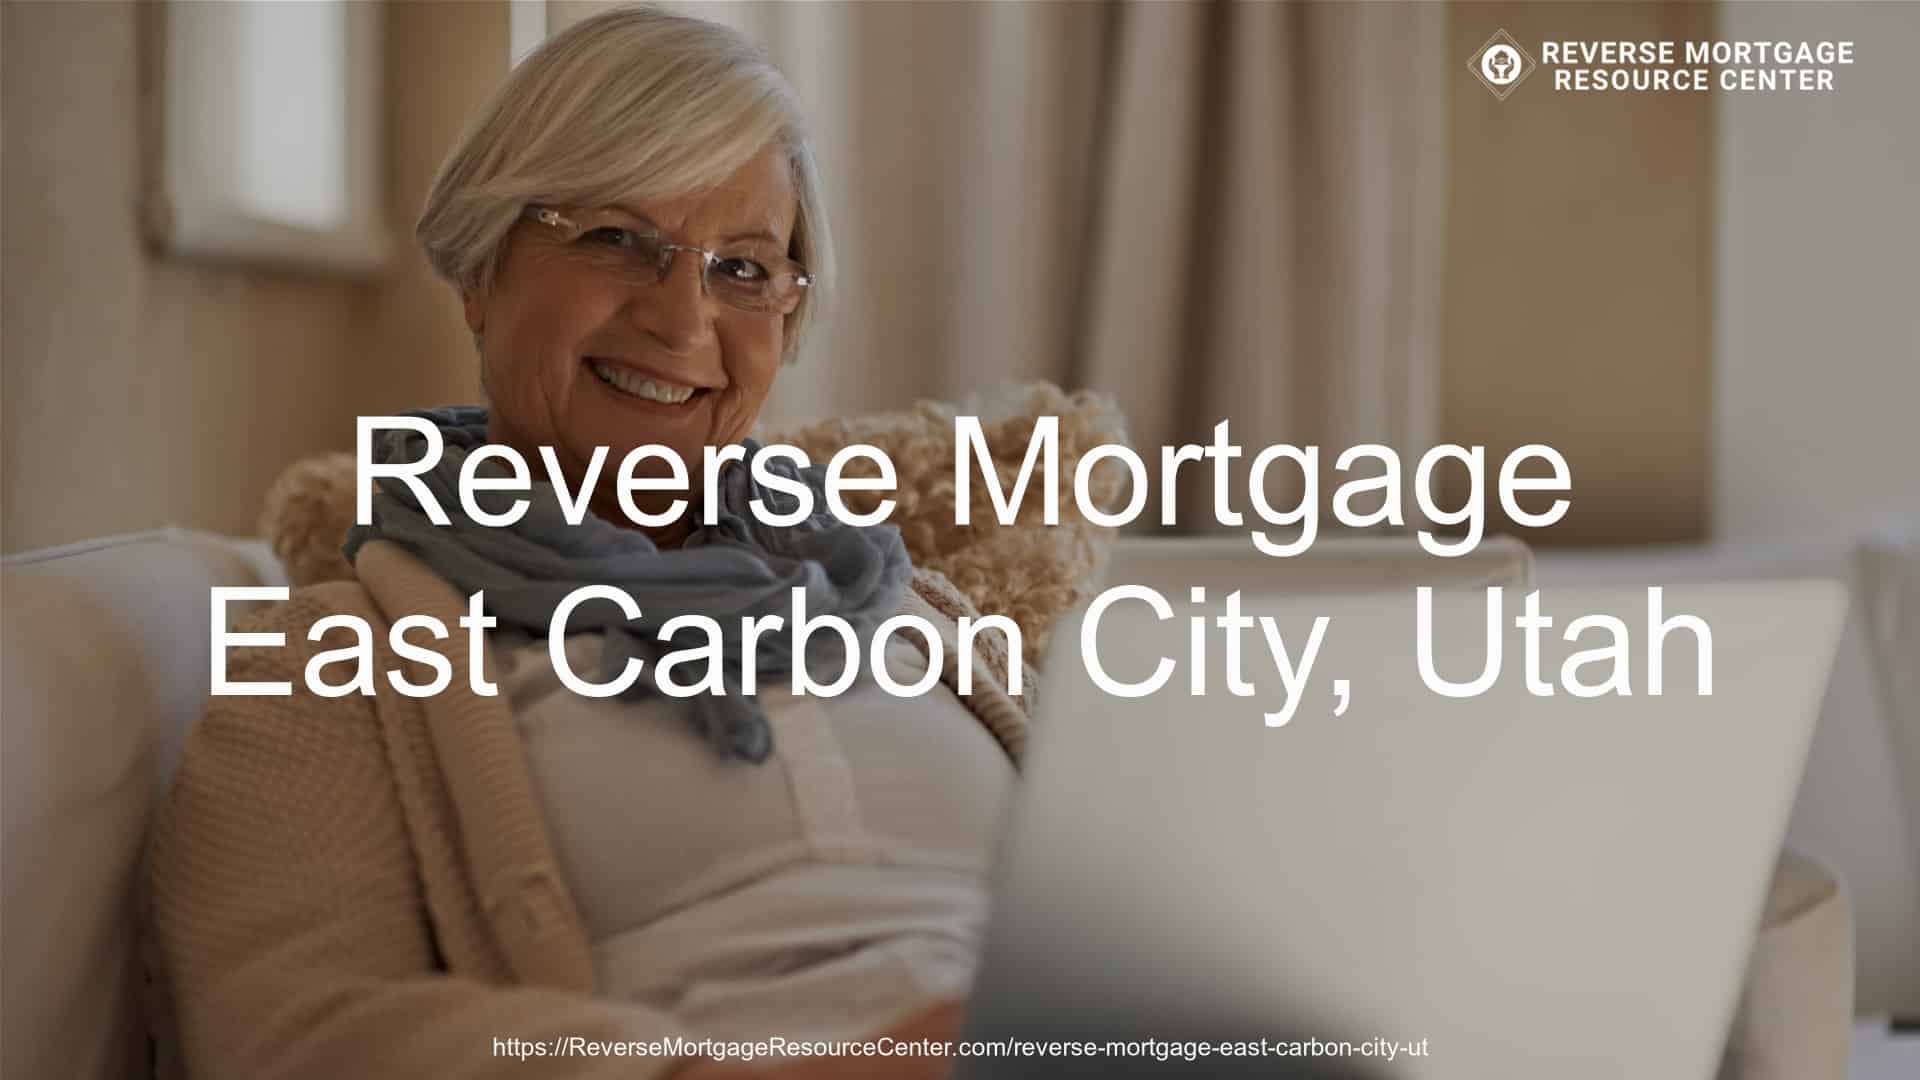 Reverse Mortgage Loans in East Carbon City Utah